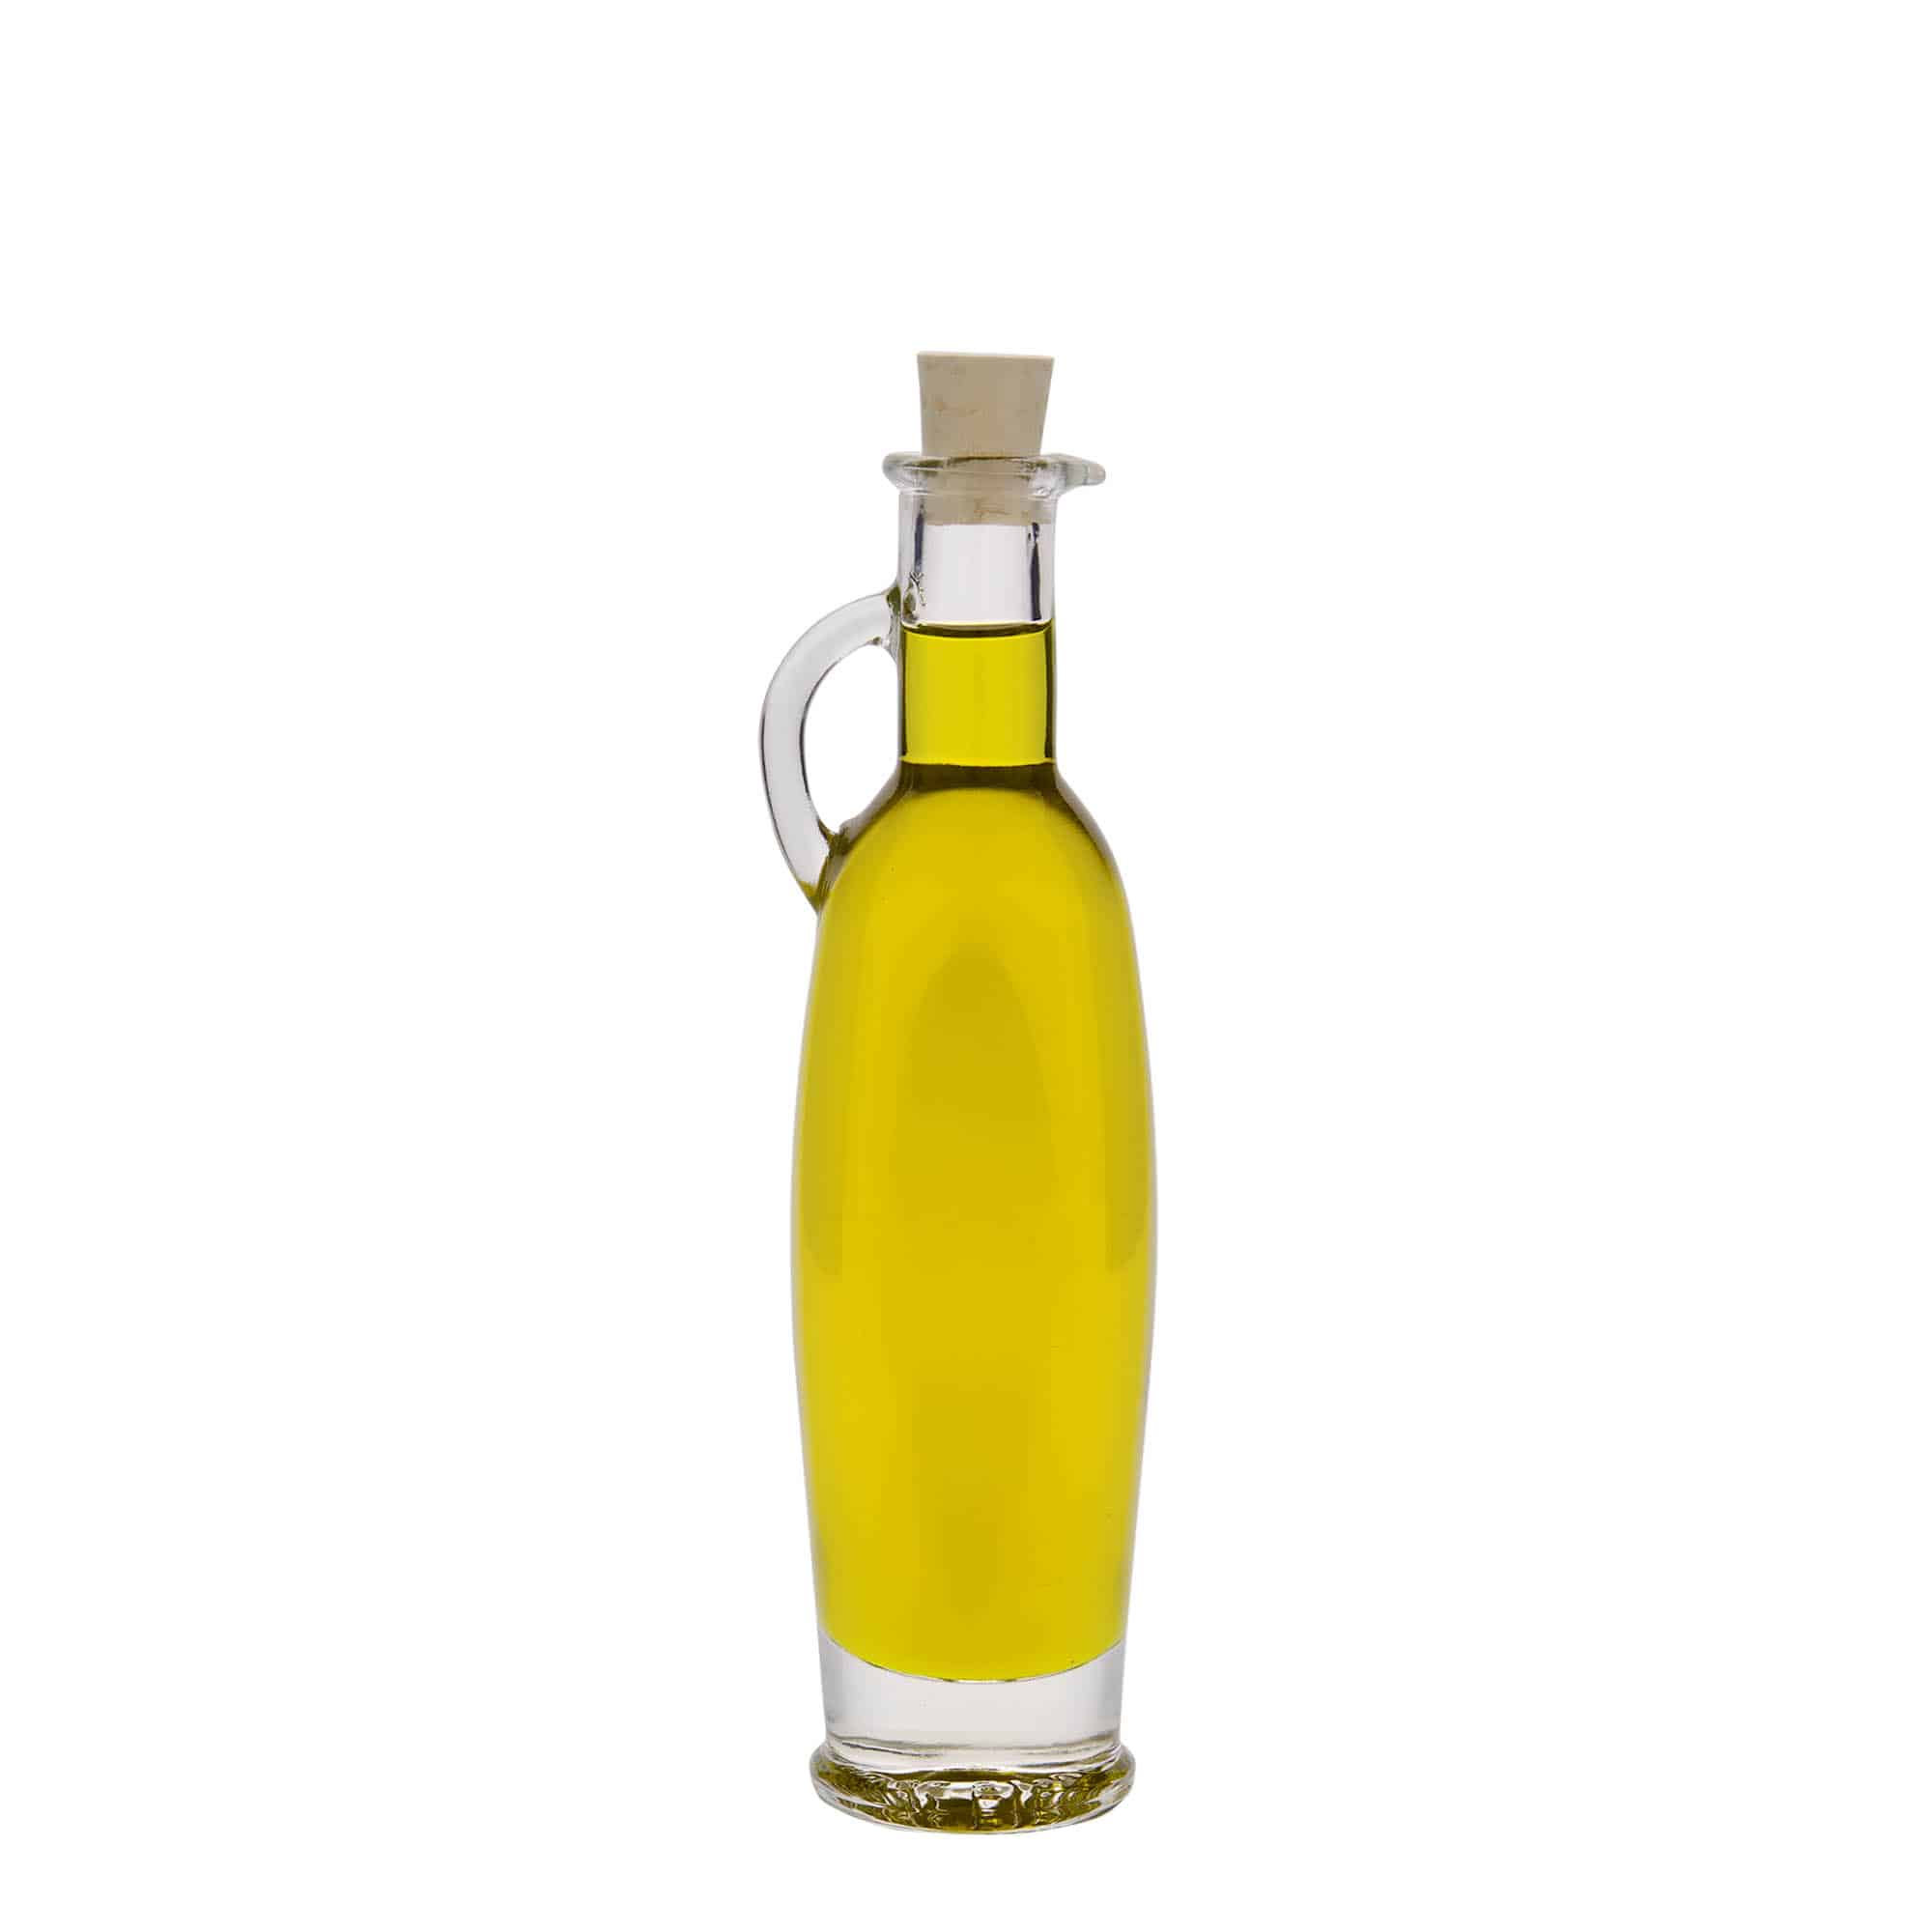 100 ml glass bottle 'Eleganta', oval, closure: cork